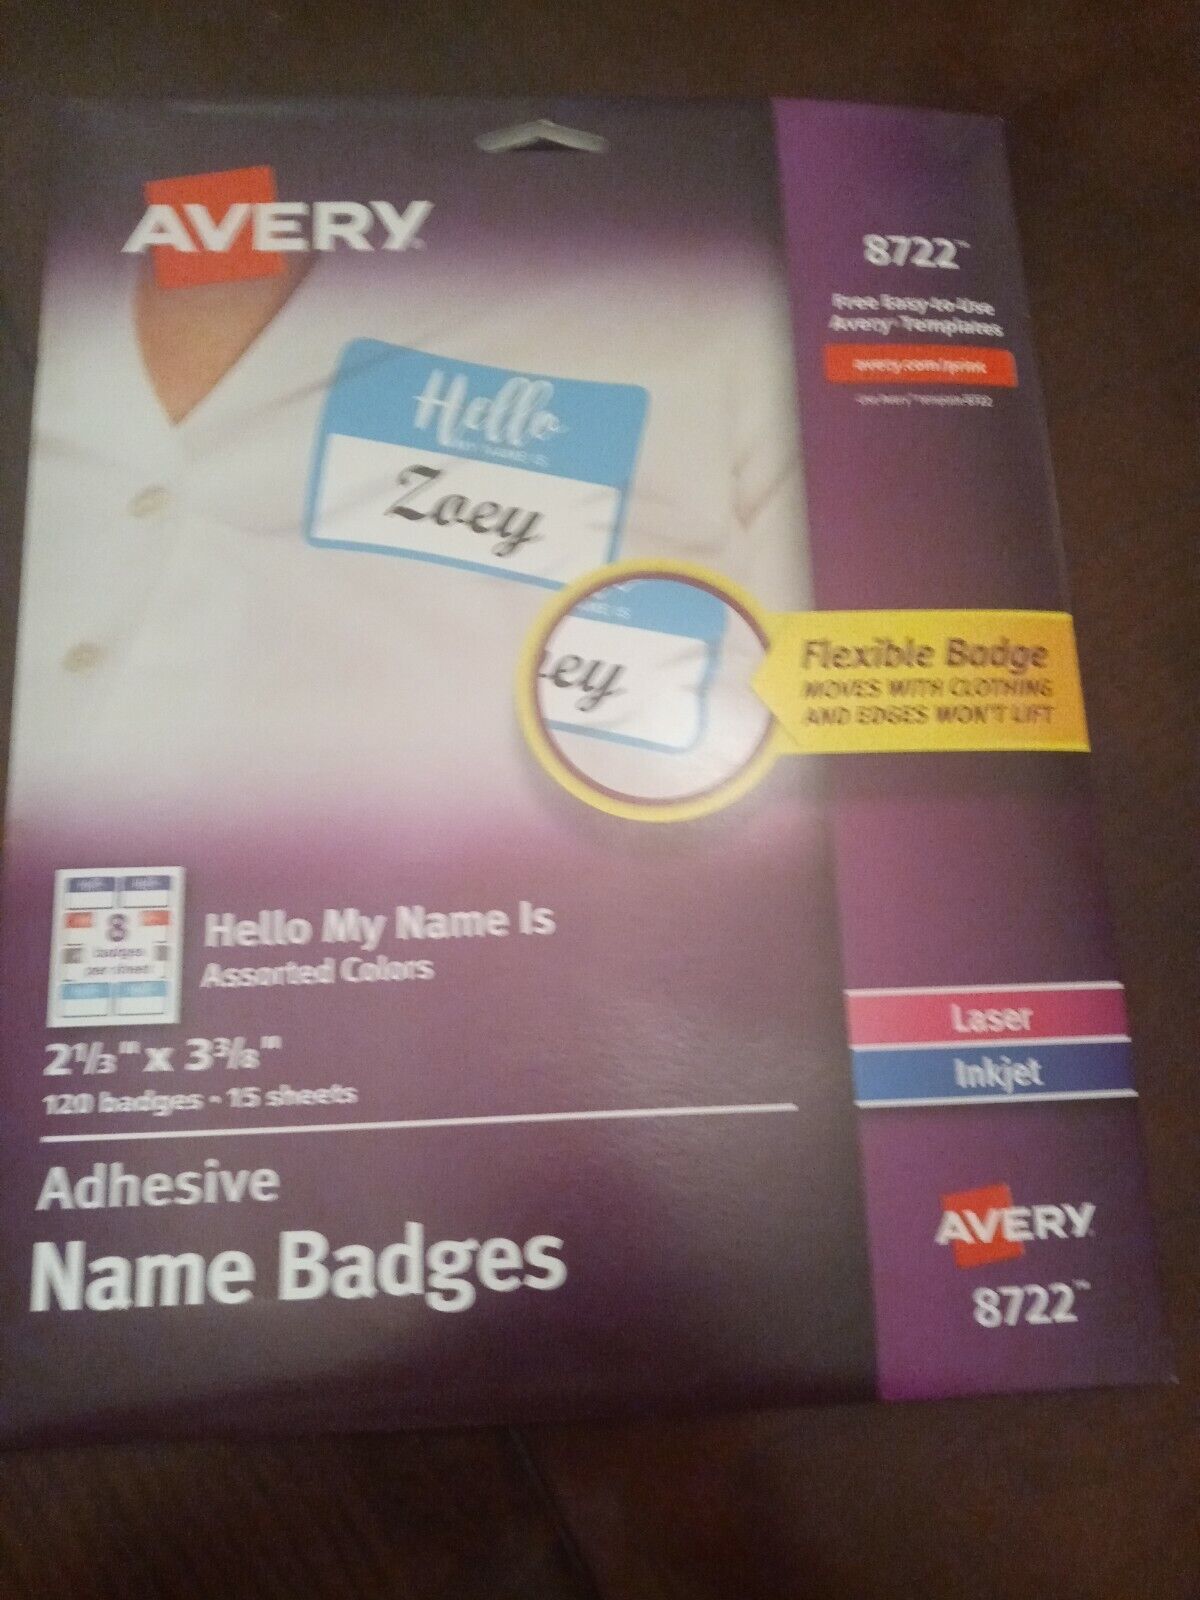 Avery Adhesive Name Badges 2 1/3" X 3 3/8" Adhesive Name Badges - $15.72